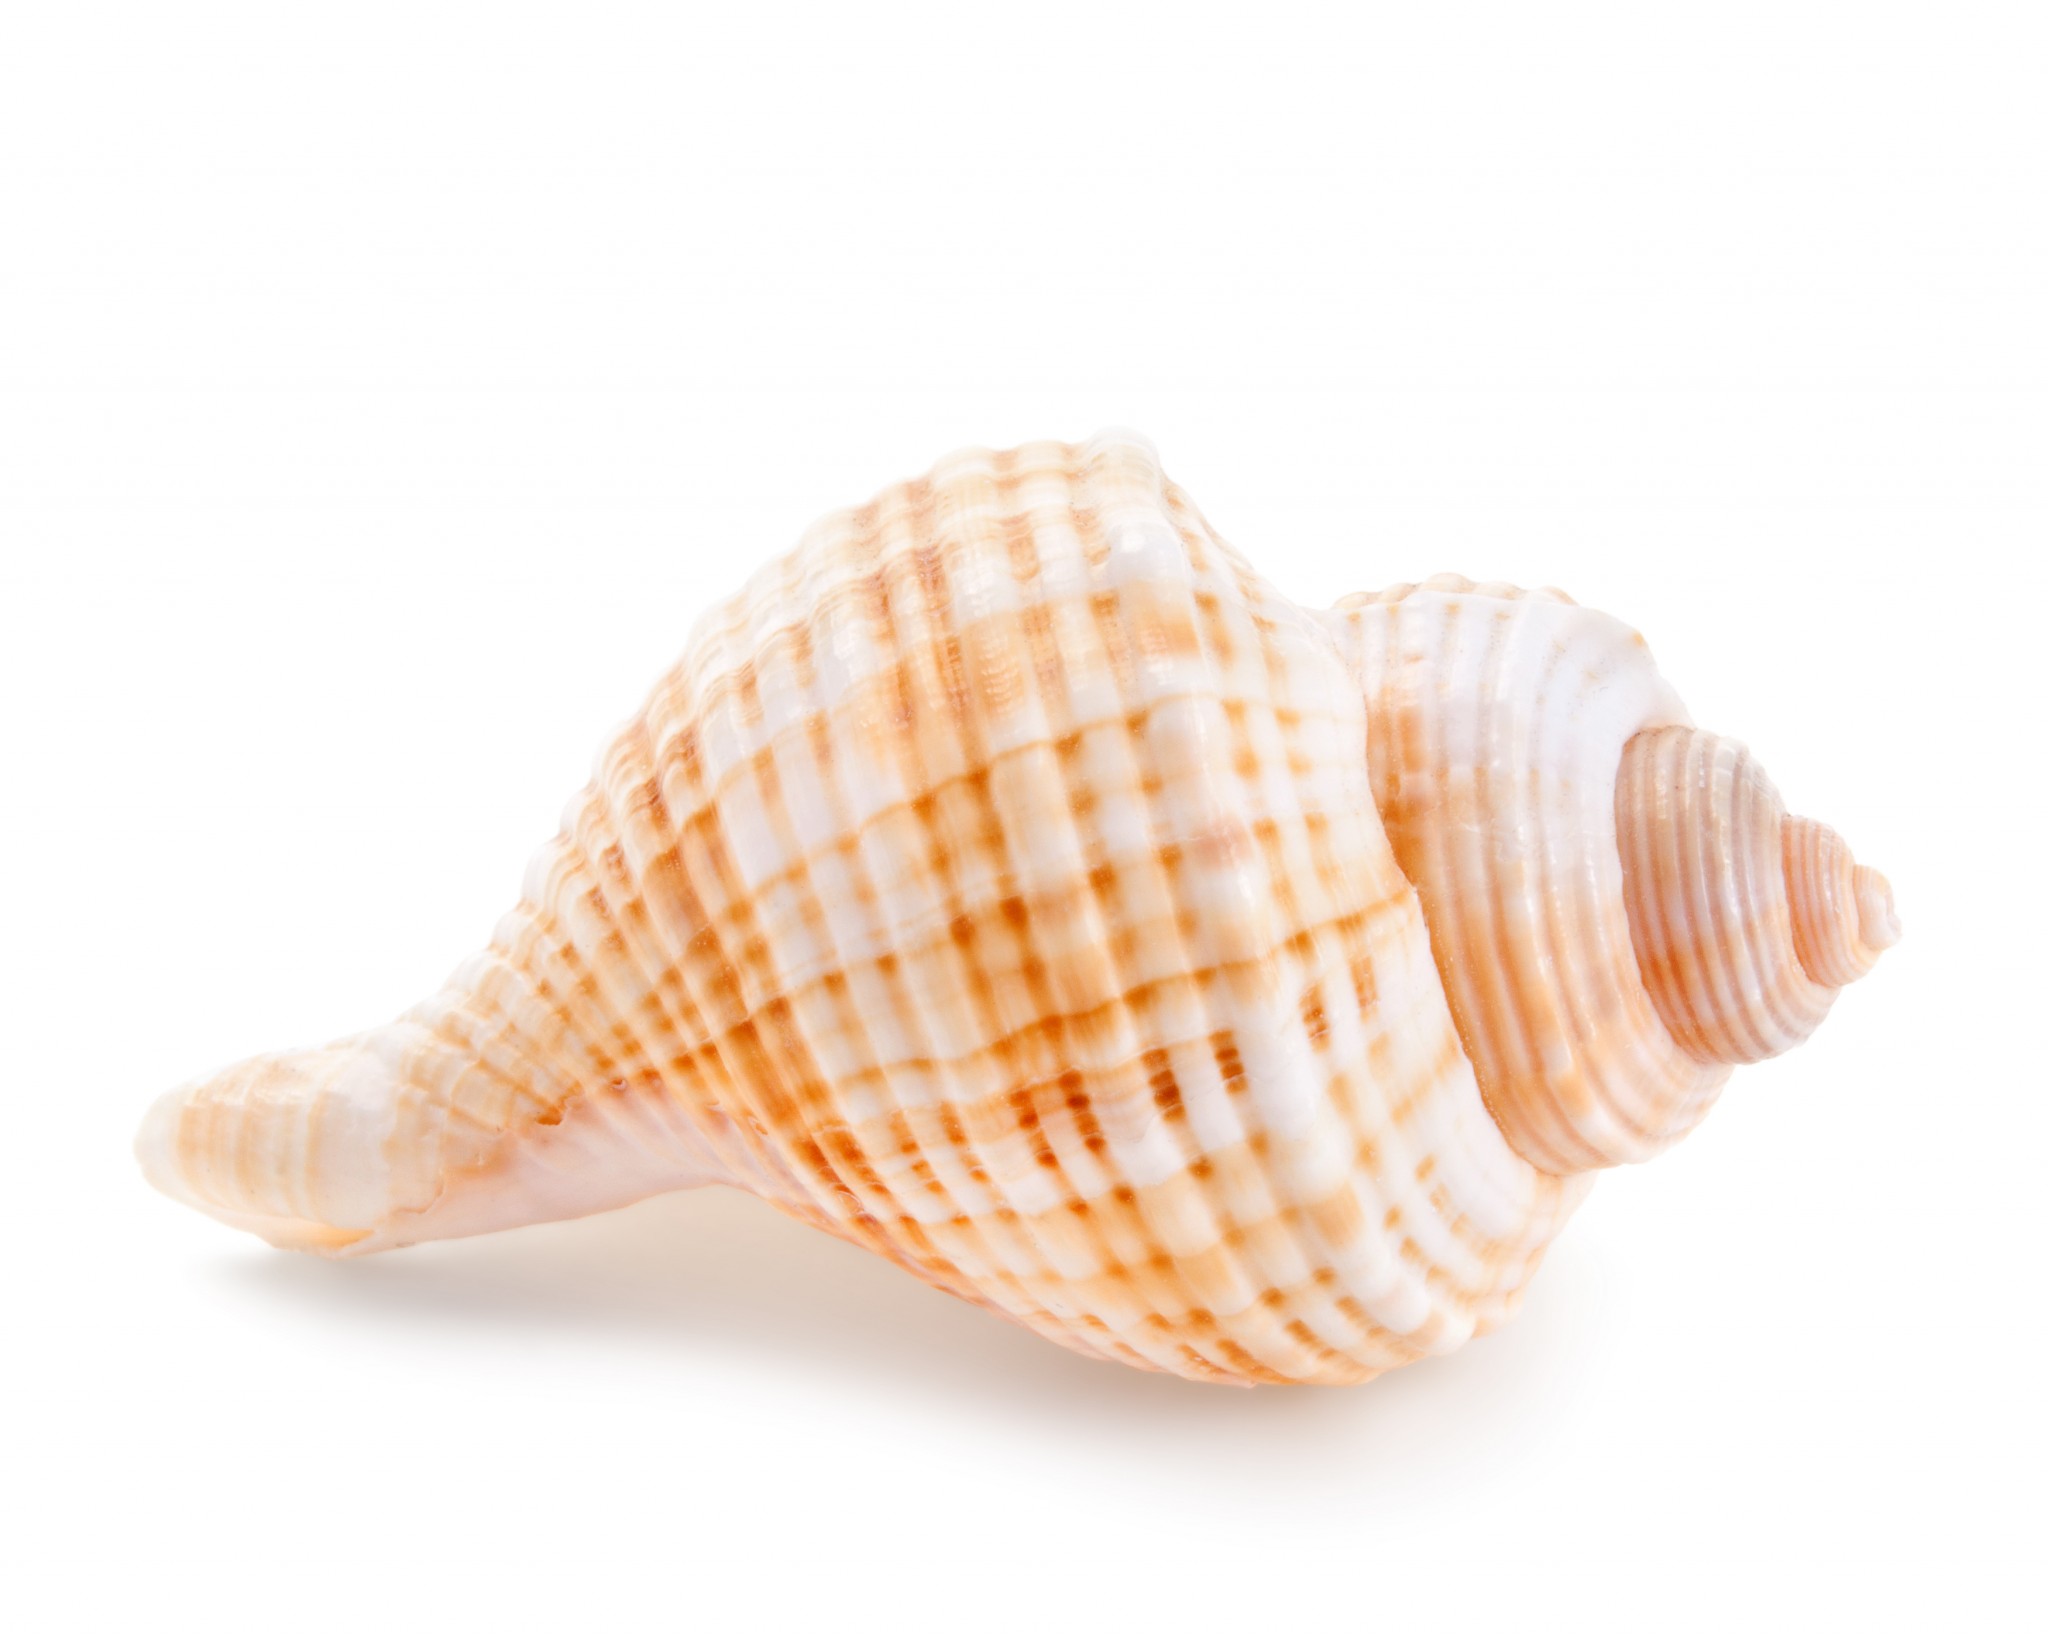 CSIRO scientists develop seashell-inspired capsule | AJP